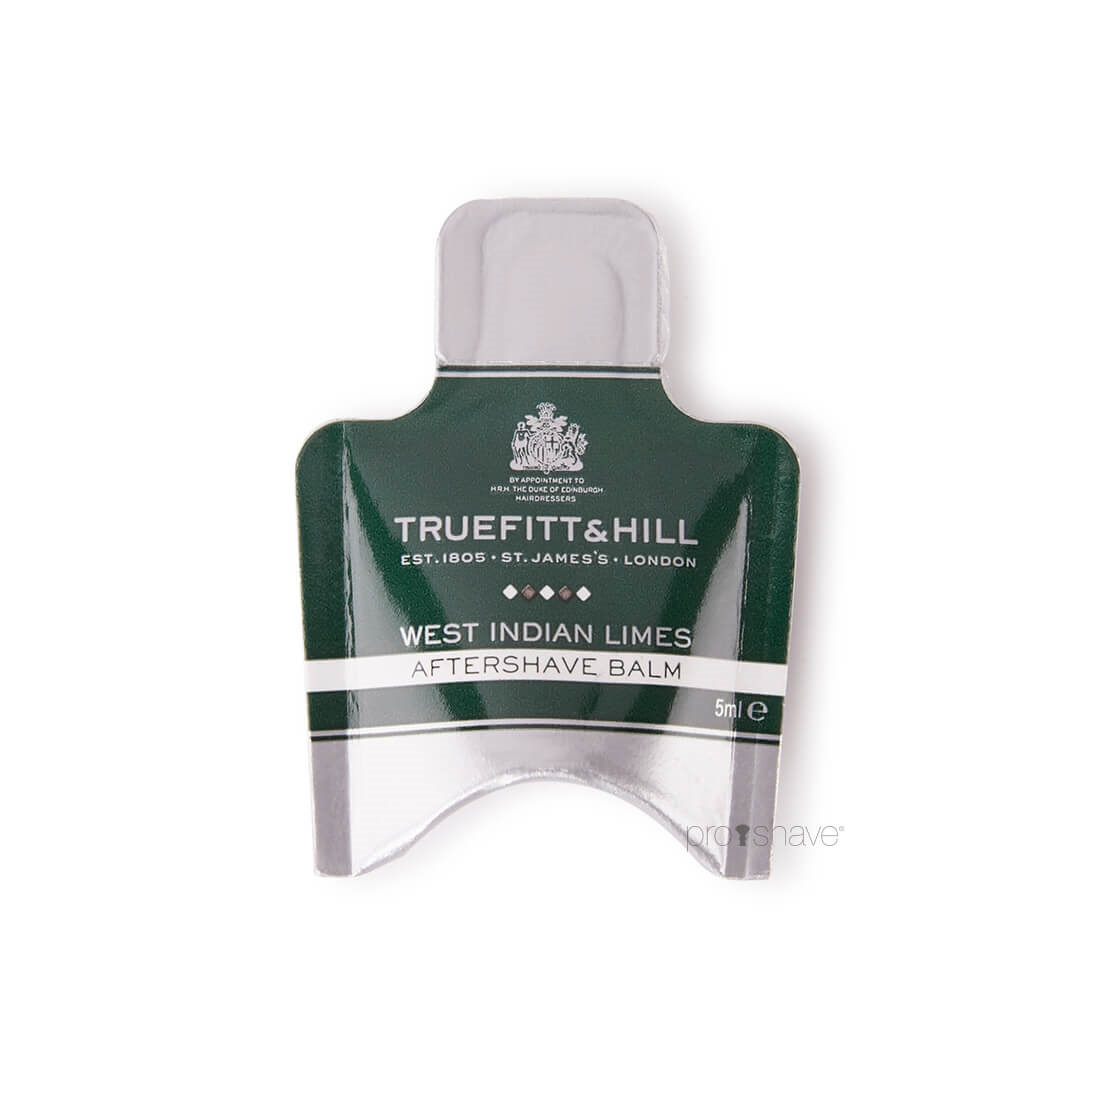 Truefitt & Hill West Indian Limes Shaving Cream Sample Pack, 5 ml.